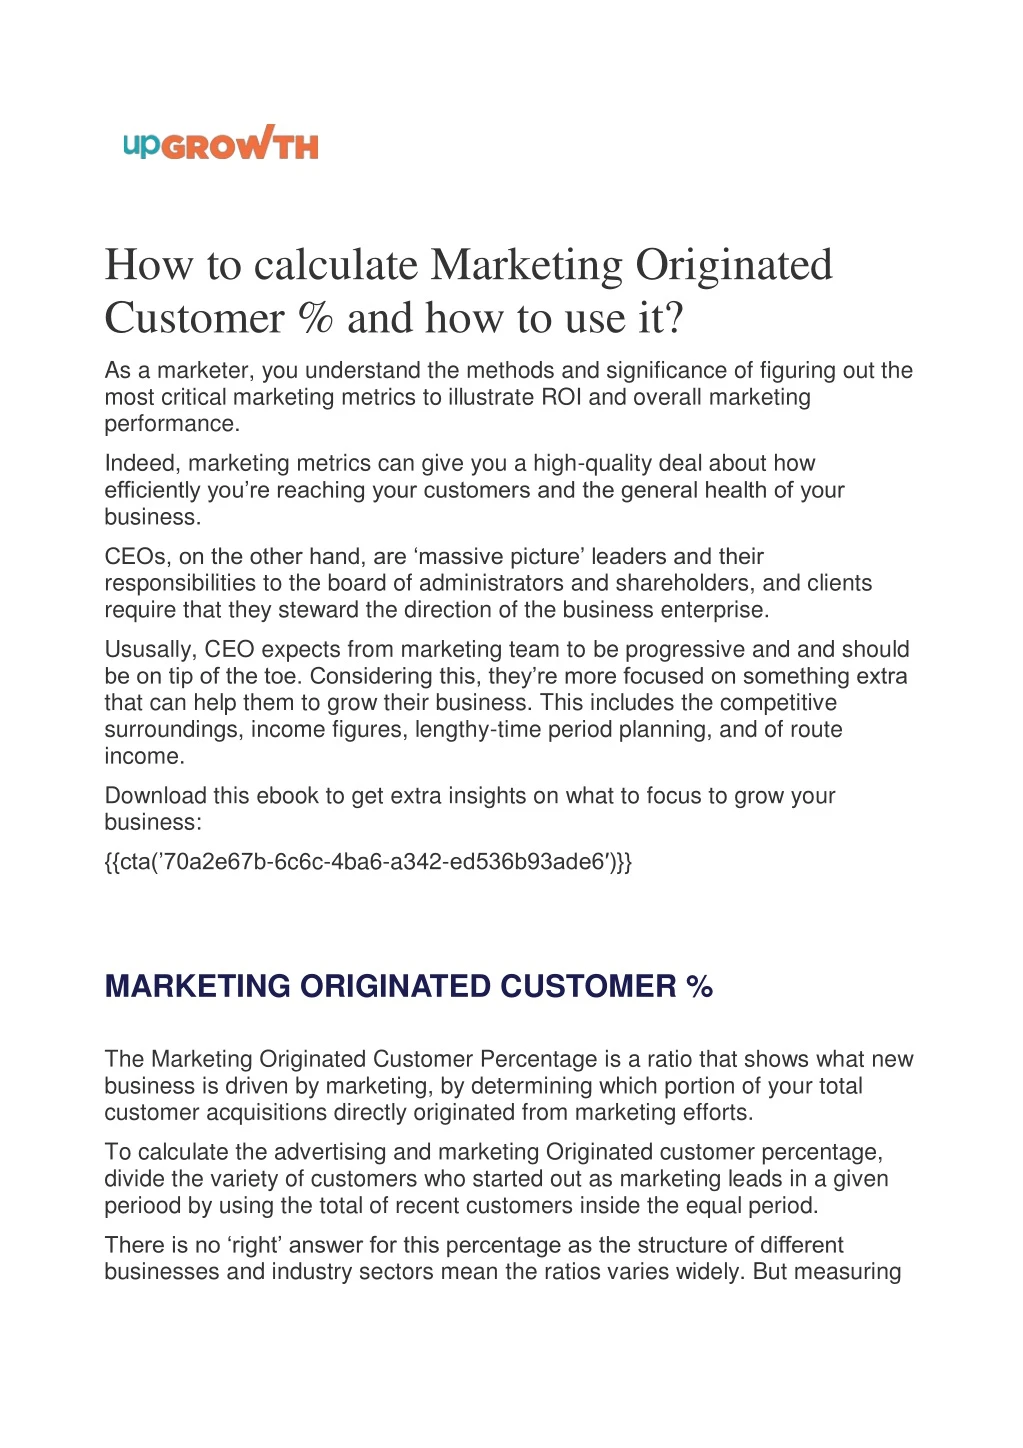 how to calculate marketing originated customer